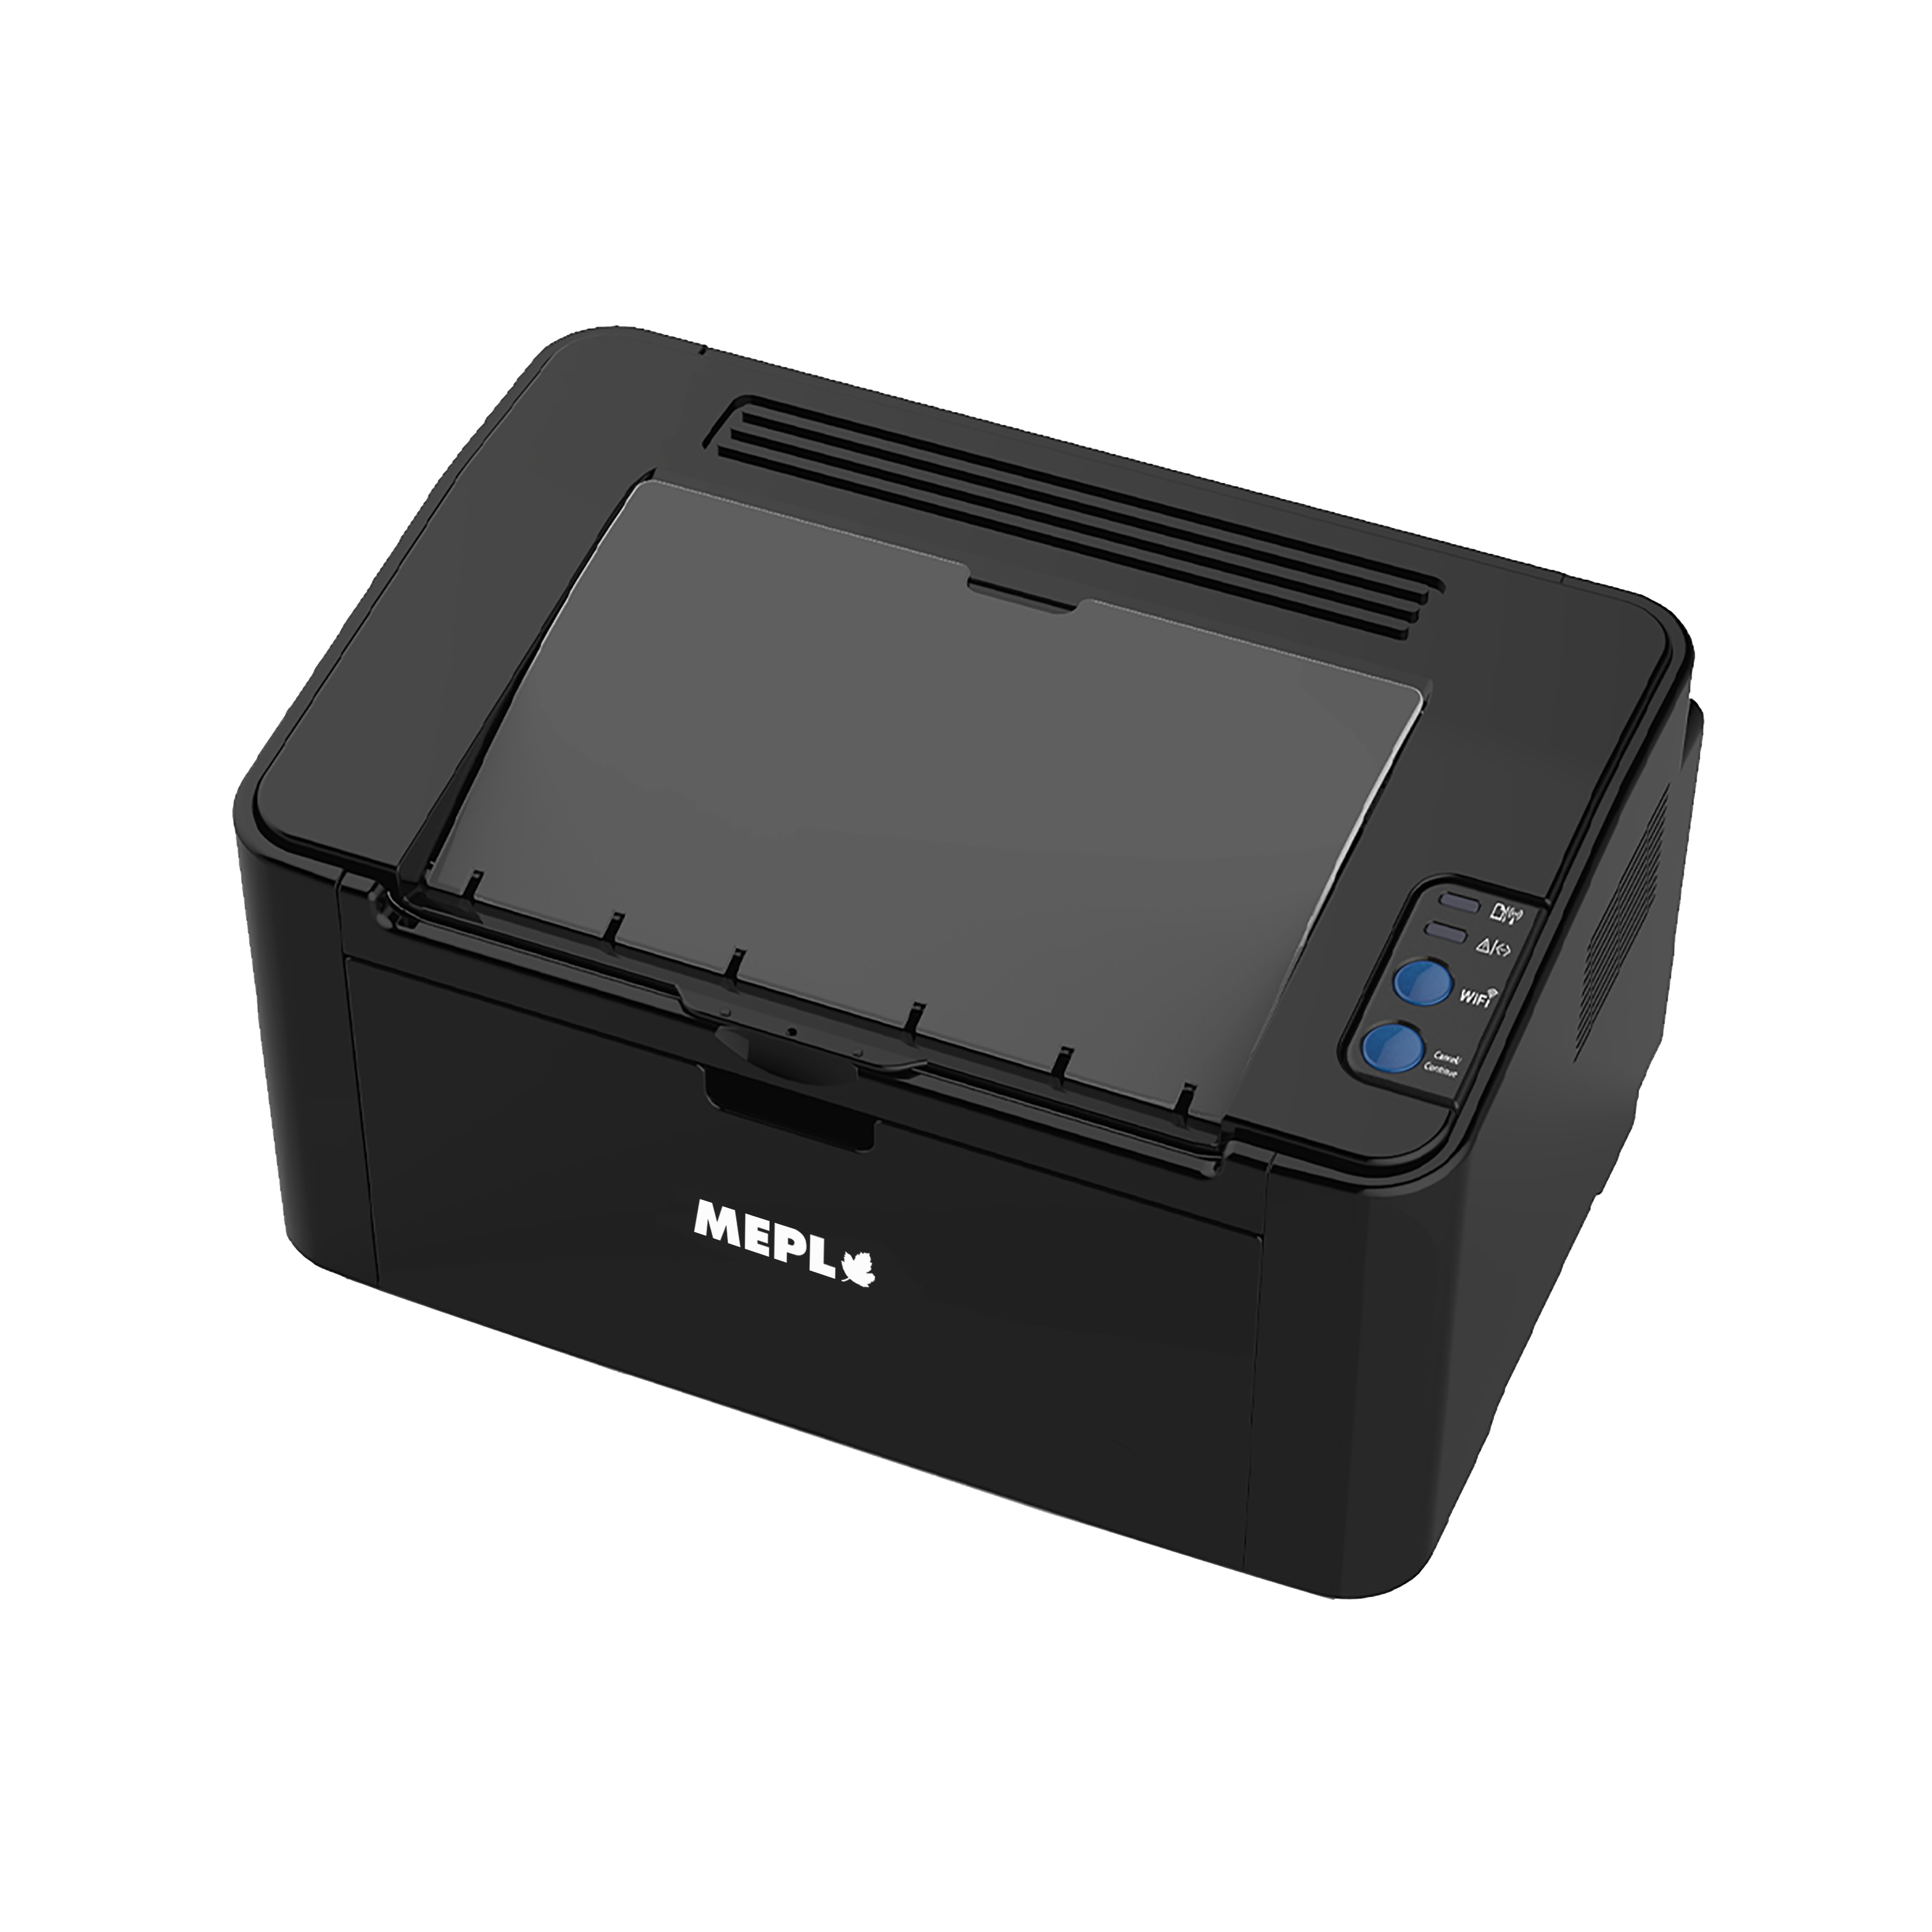 MEPL Multifunction Printer MP2503W